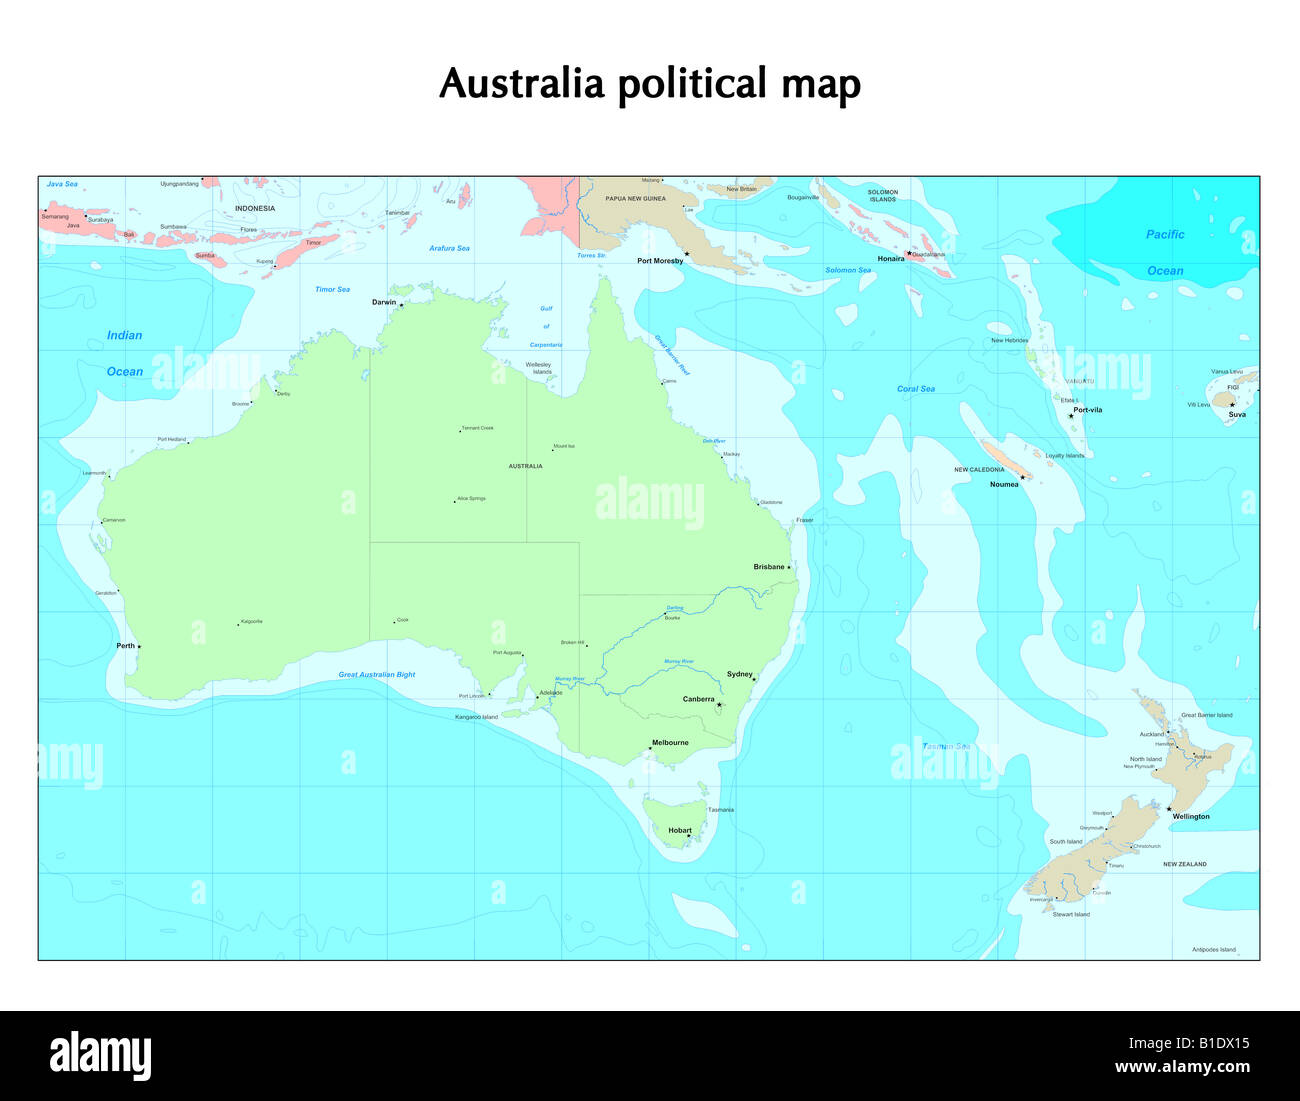 Australia political map Stock Photo